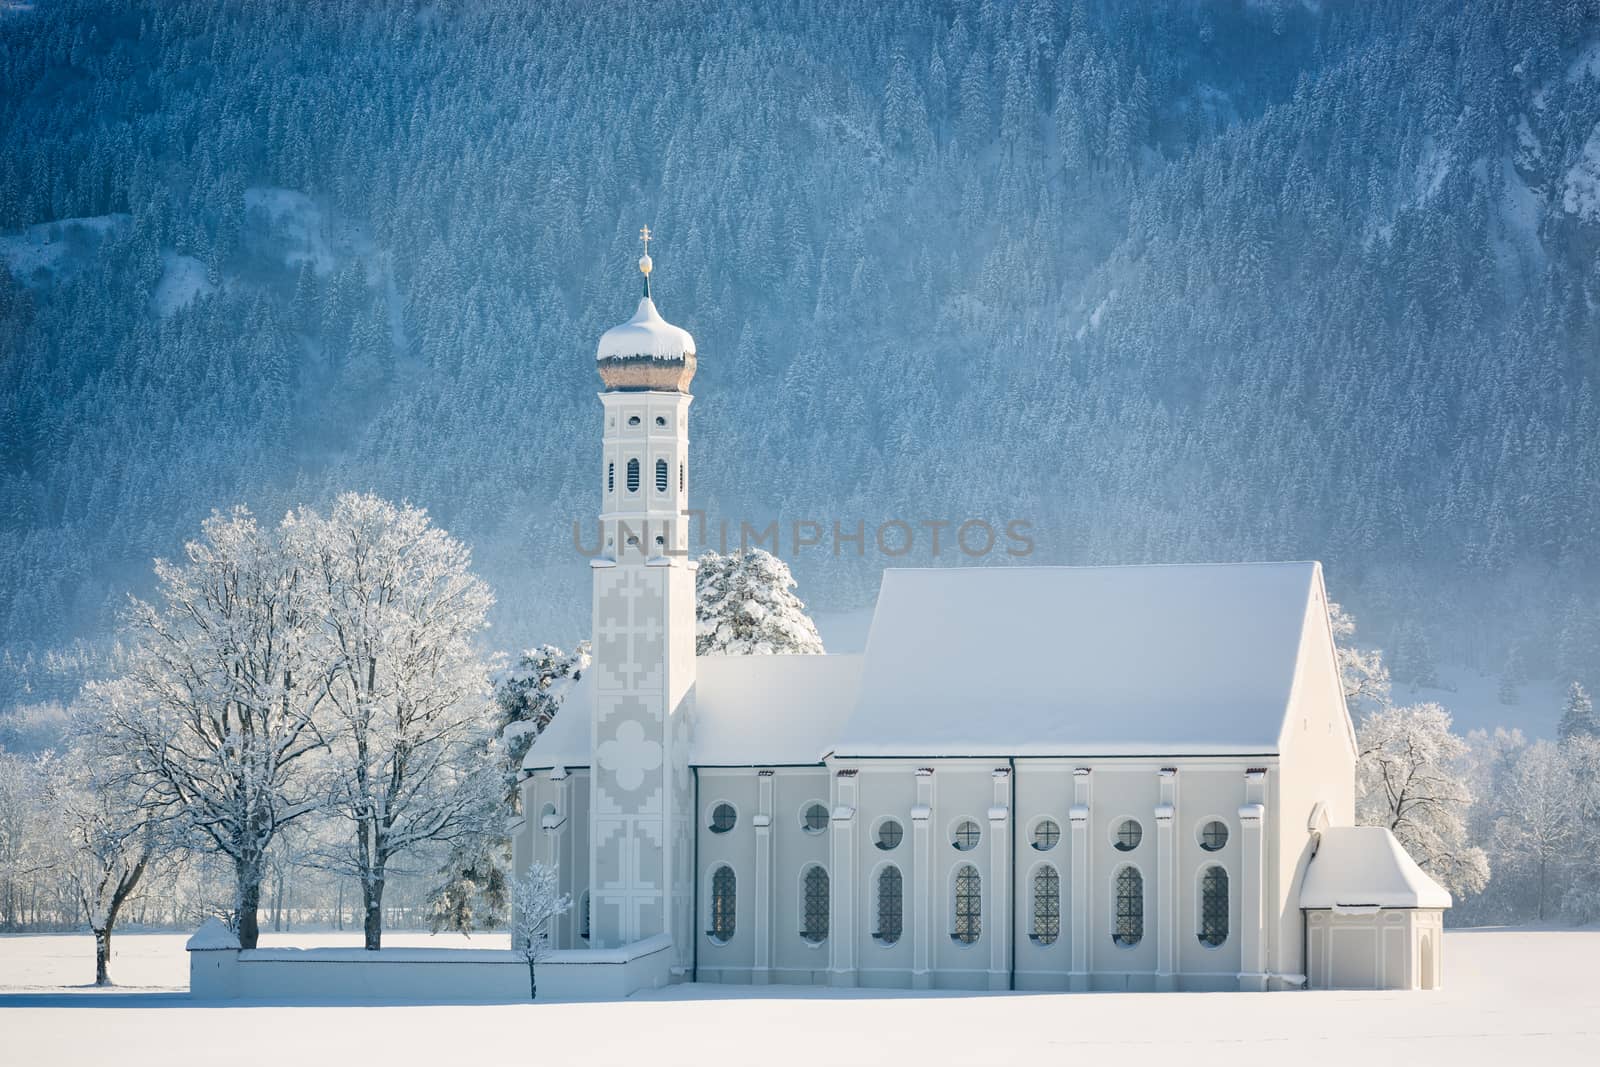 St. Coloman at wintertime, Allgau, Germany